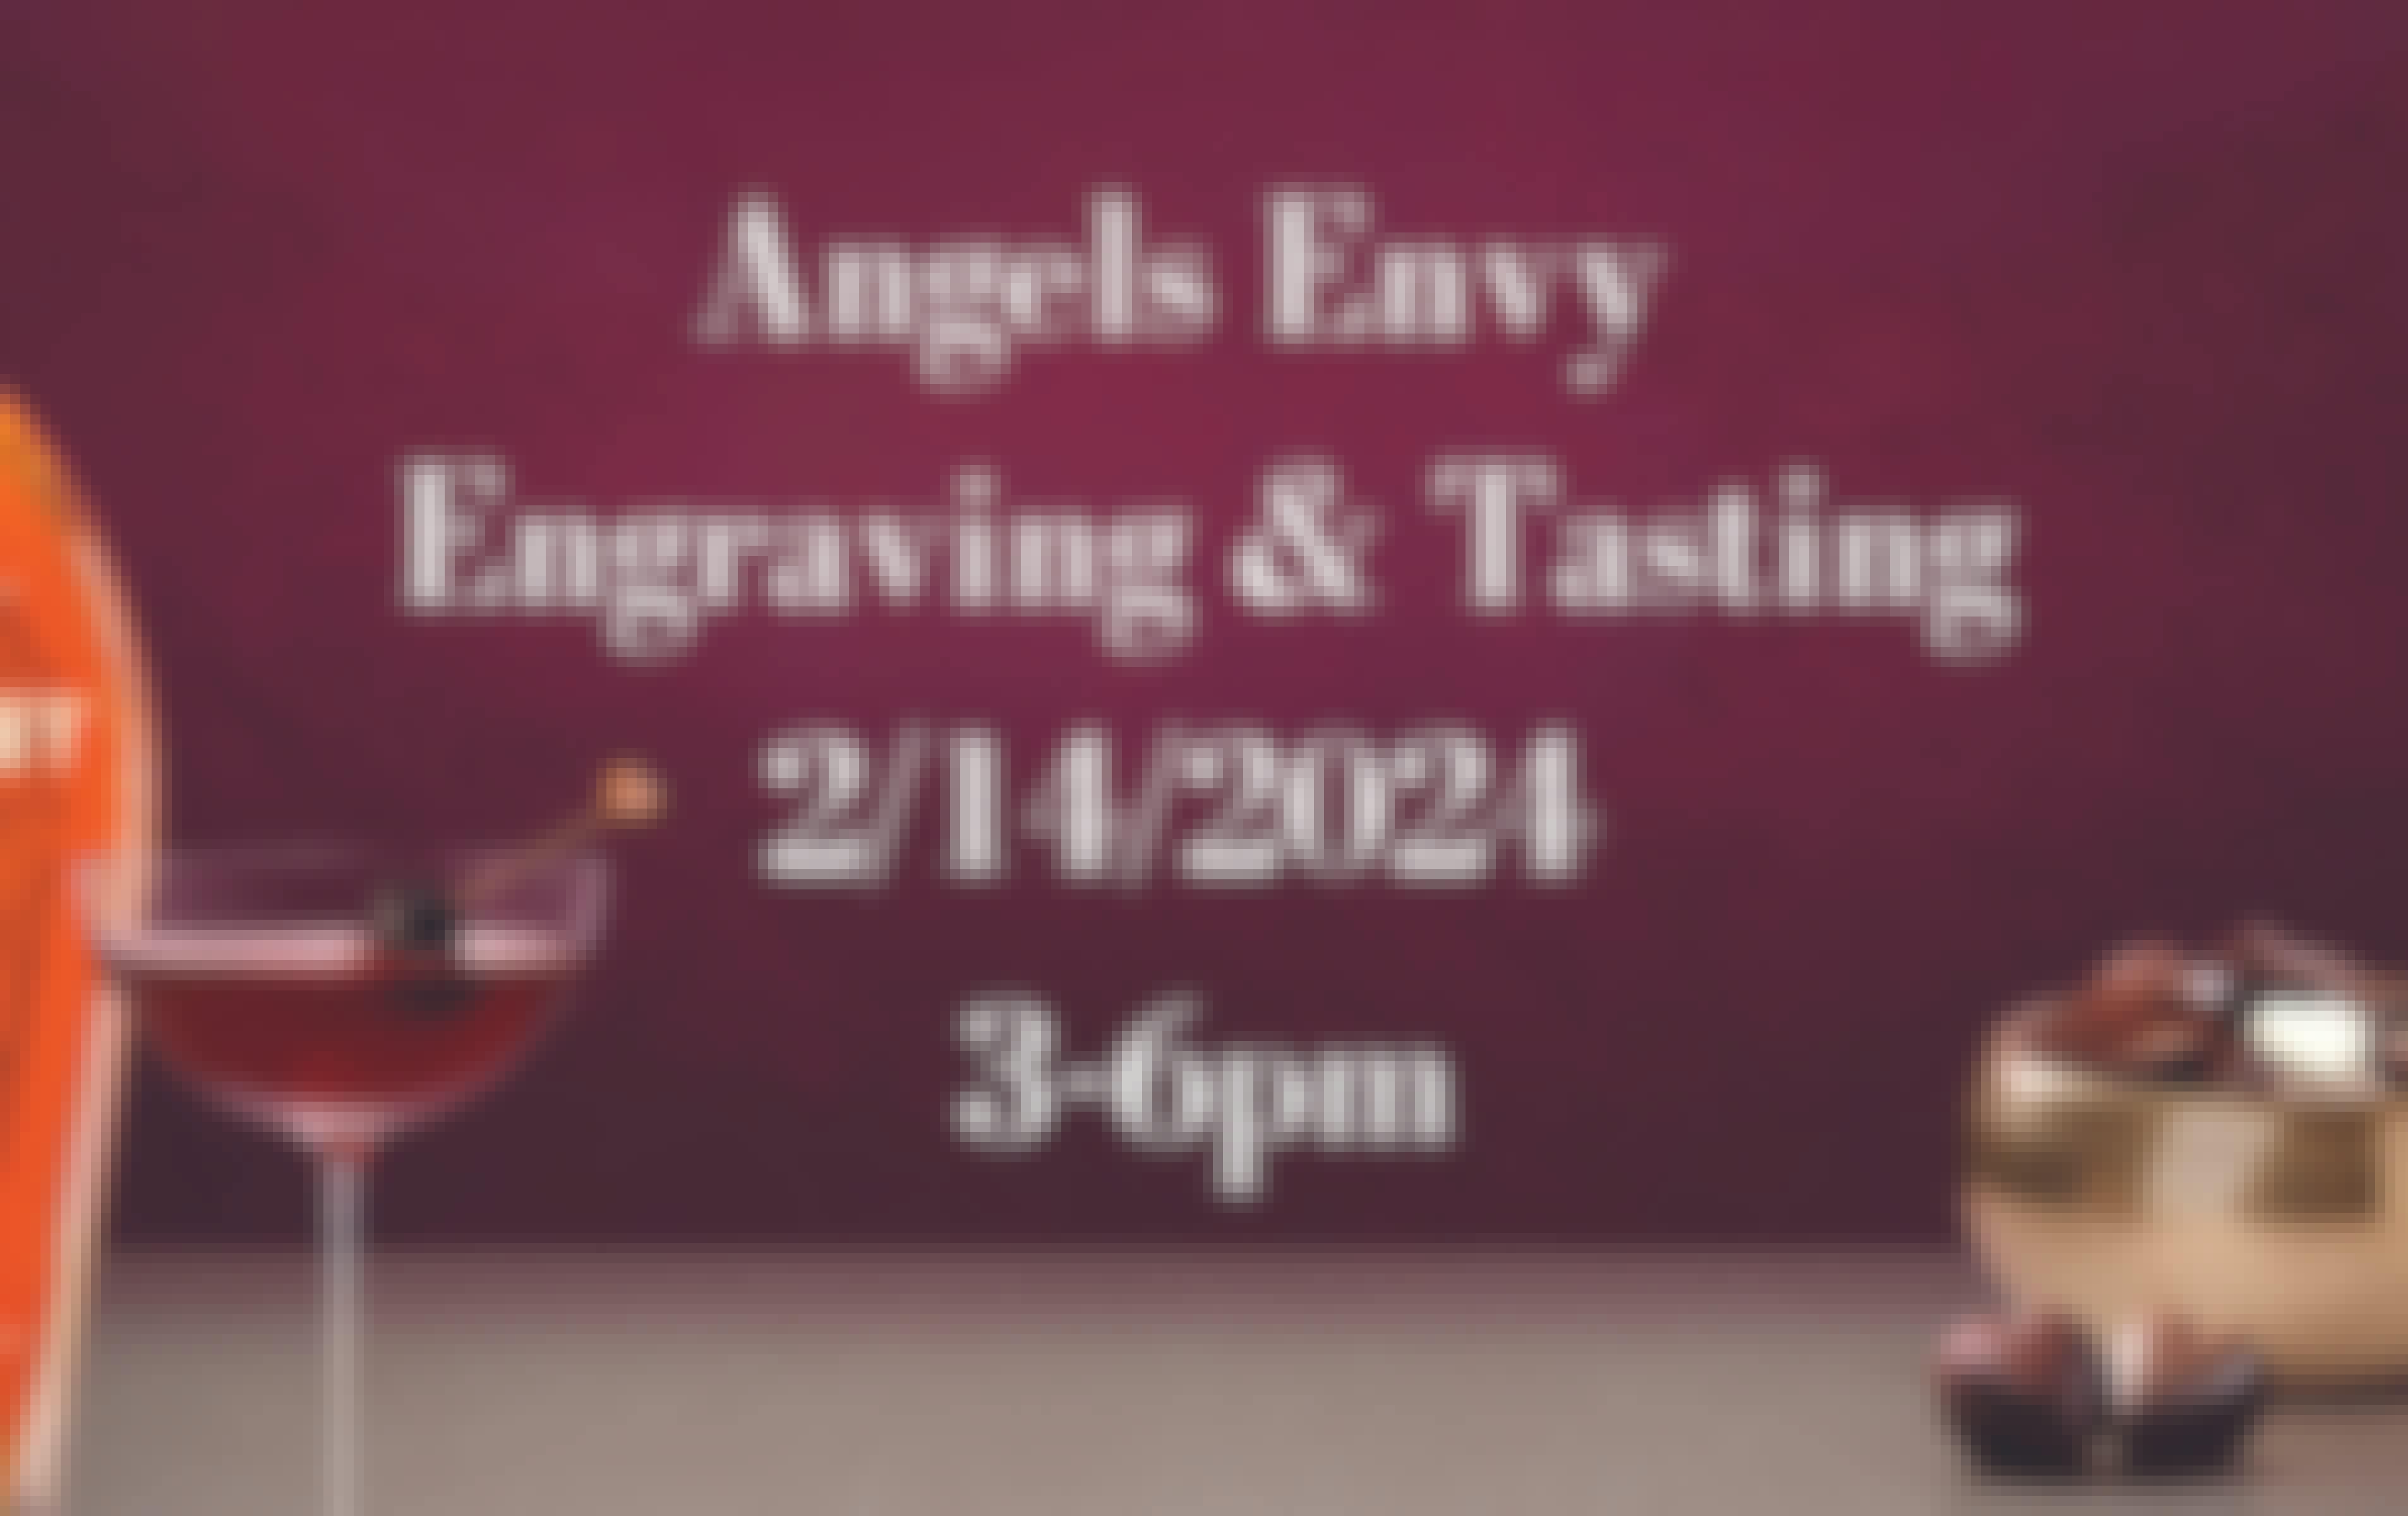 Angels Envy Engraving and Tasting